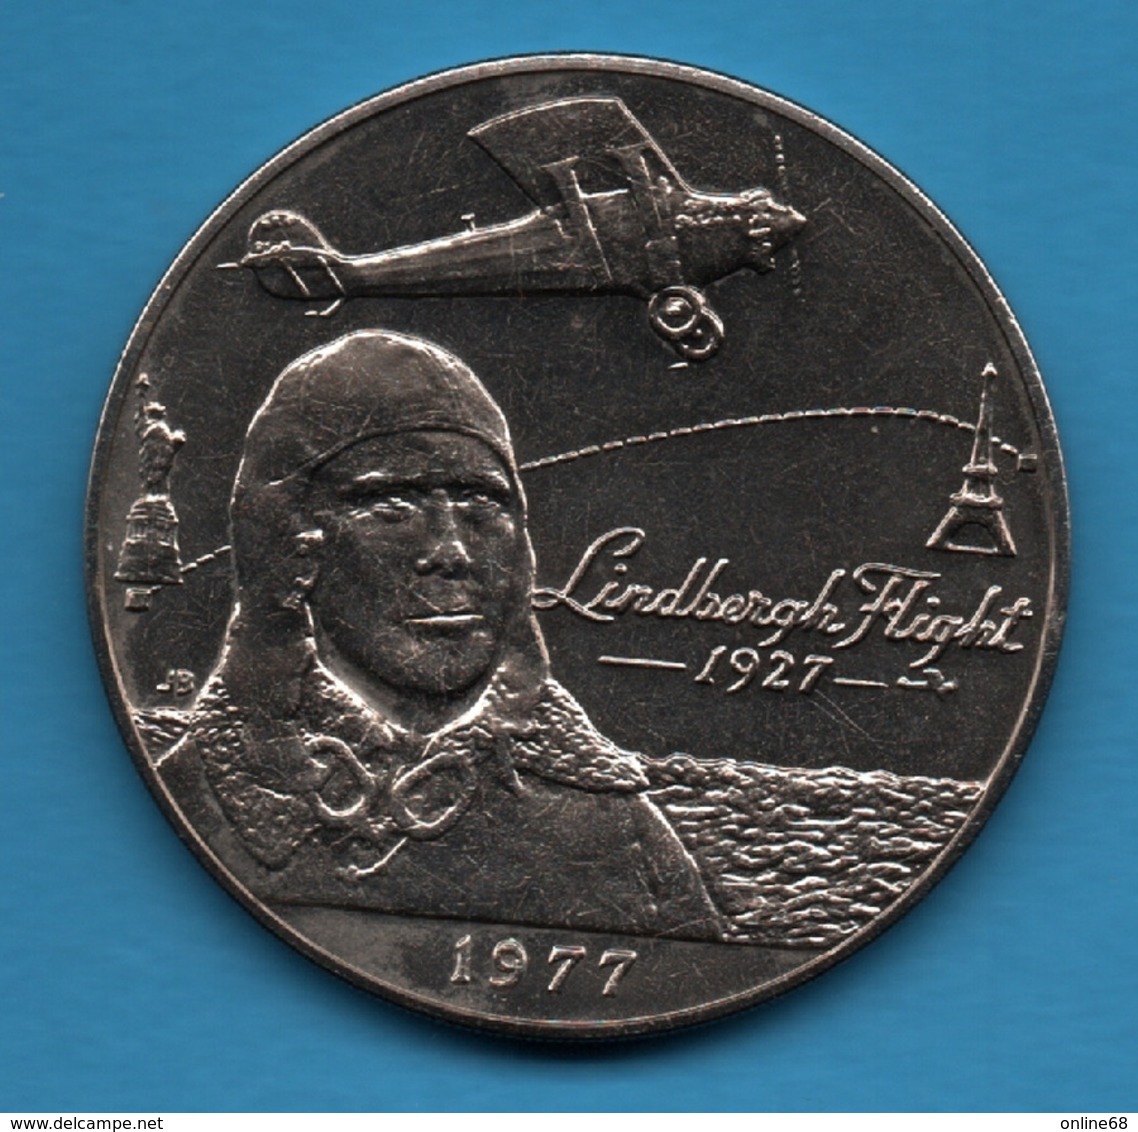 SAMOA I SISIFO 1 TALA 1977 KM# 26 Charles Lindbergh Flight  1927 AVION - Samoa